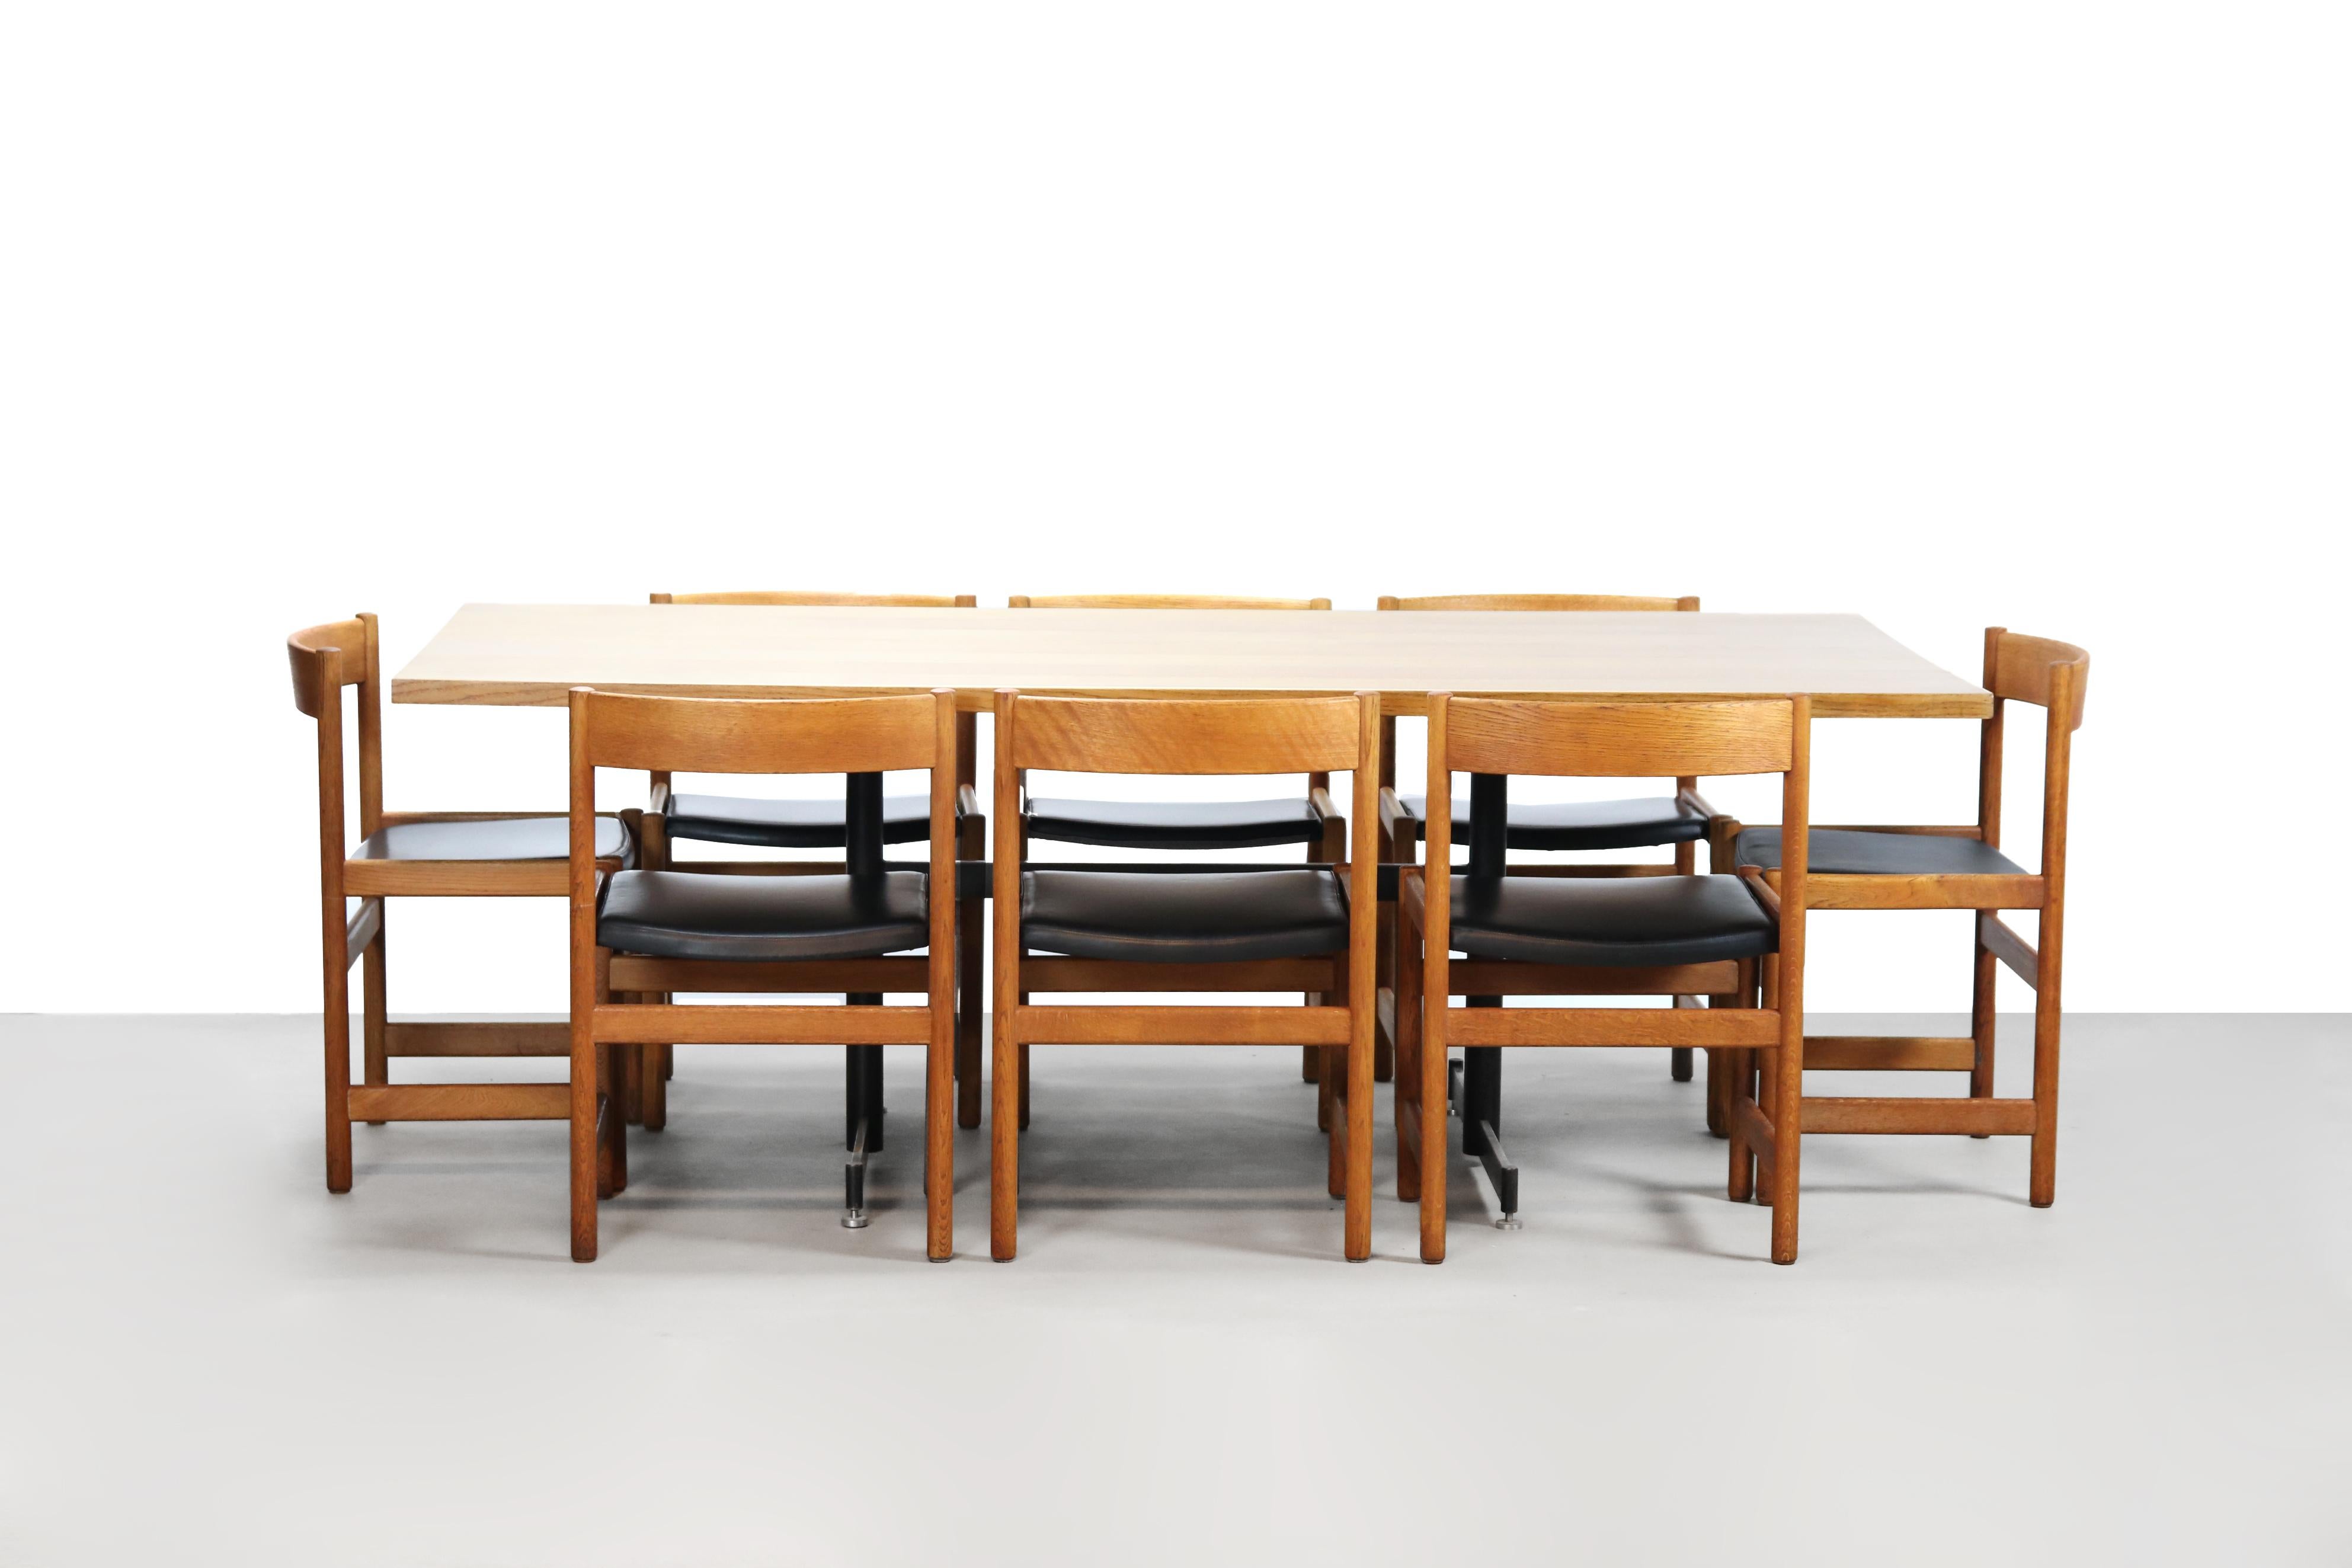 20th Century Set of 4 Yngvar Sandström Dining Room Chairs in Solid Oak by Nordiska Kompaniet